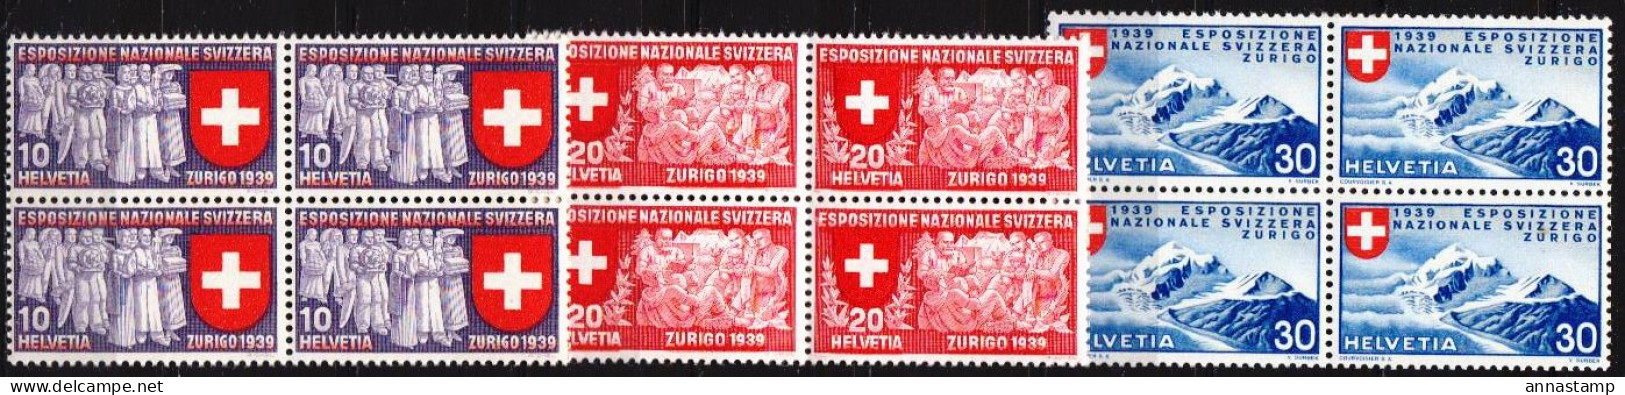 Switzerland MNH Set In Blocks Of 4 Stamps, Italian Inscription - Expositions Philatéliques